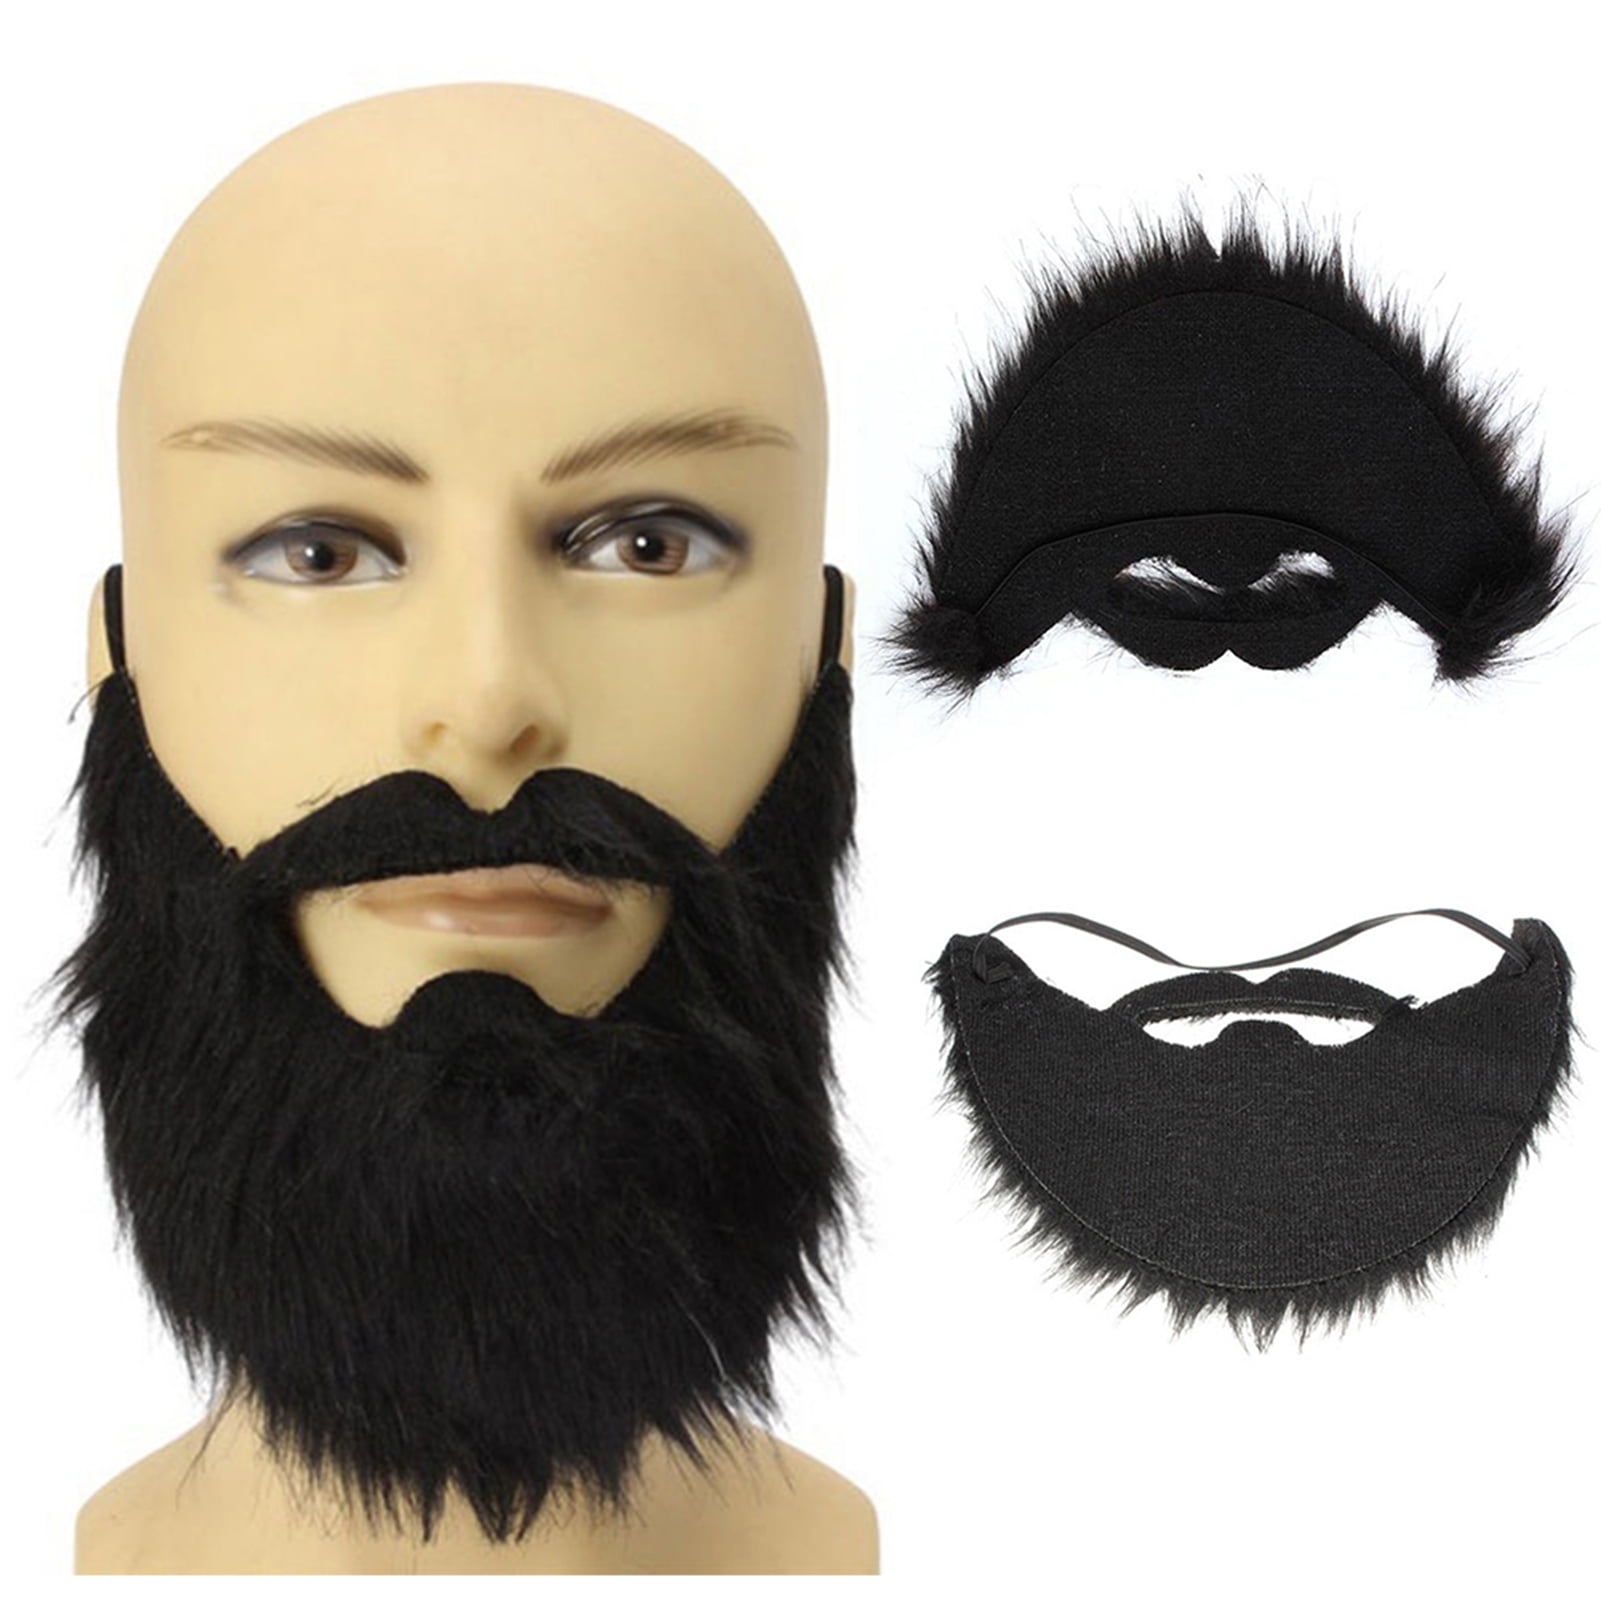 False Beard Cosplay Simulation Men's Fake Beard Moustache Realistic Makeup Props 